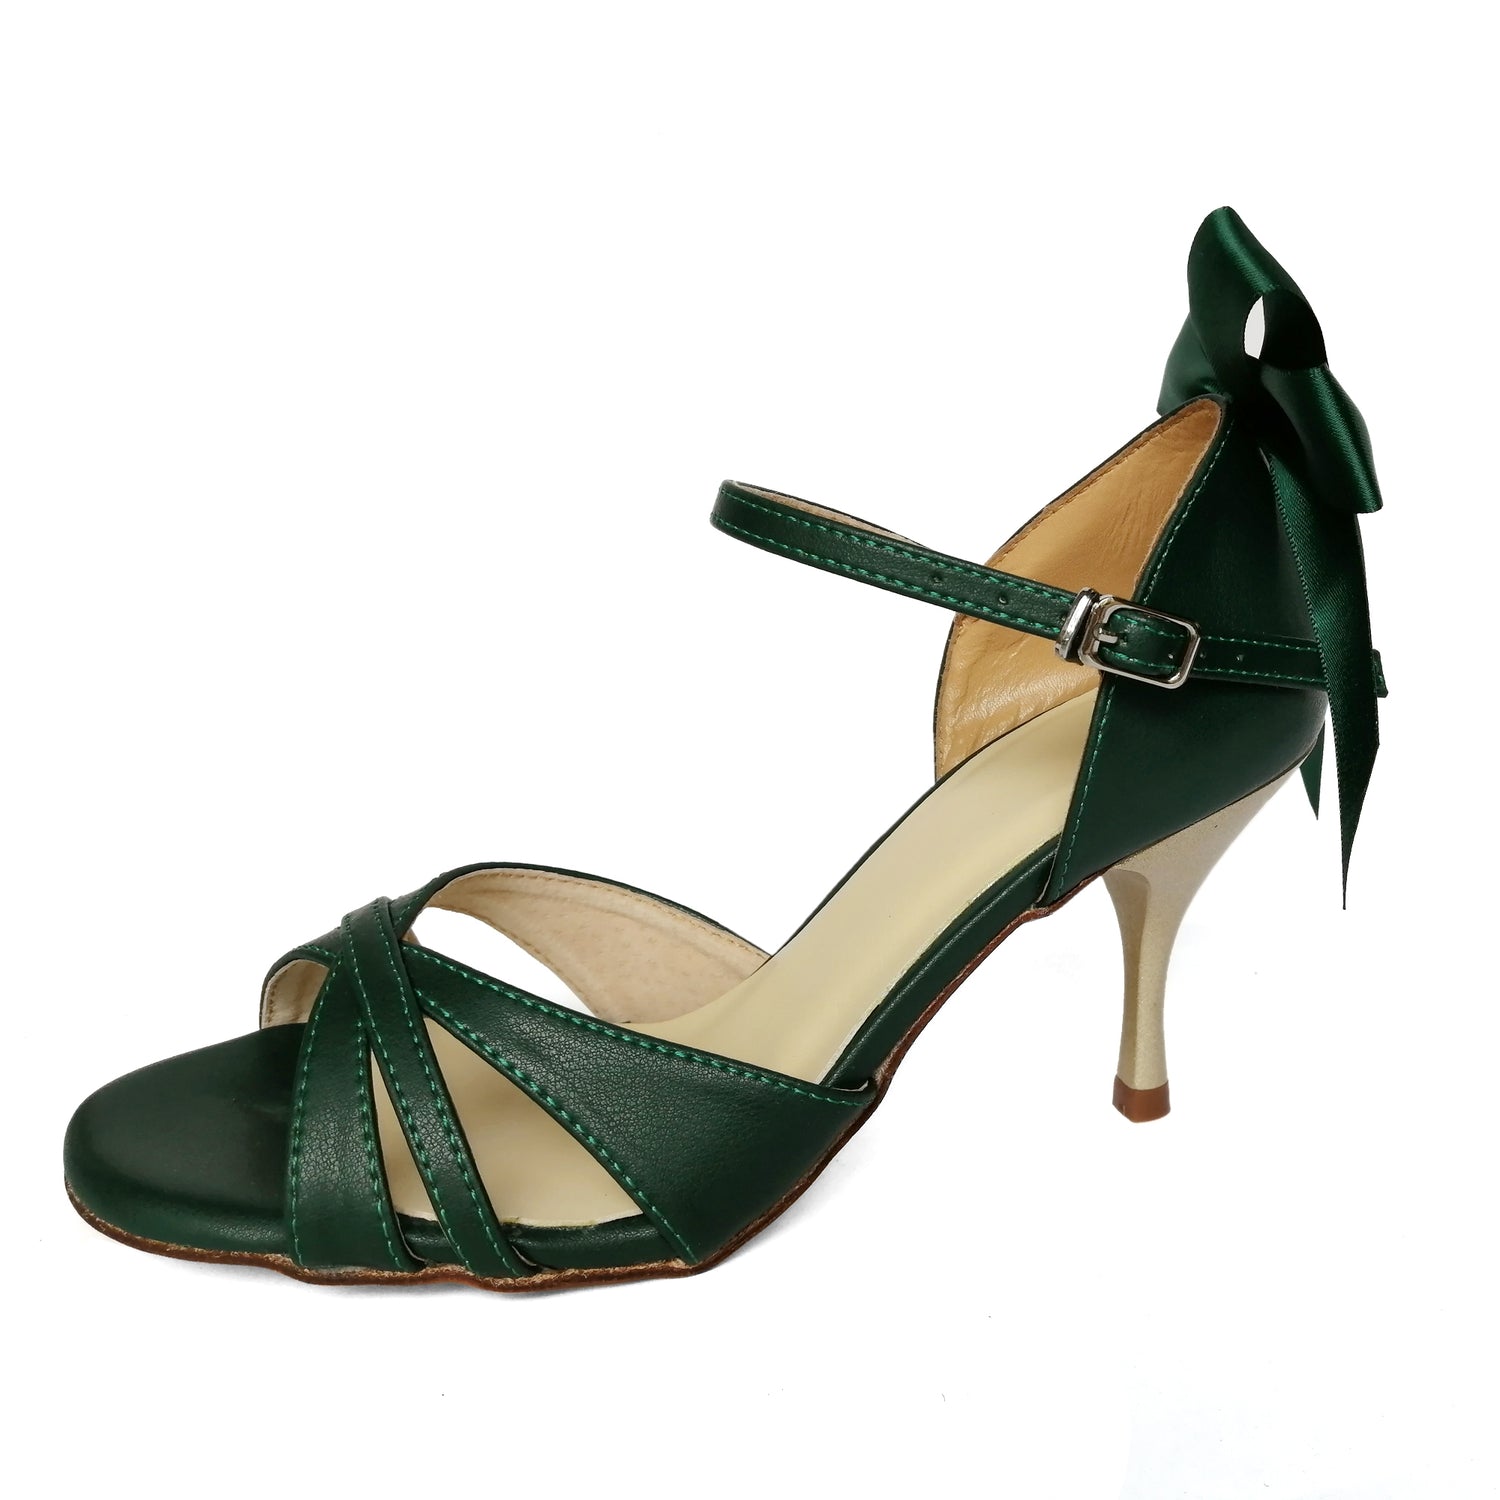 Pro Dancer Women's Argentine Tango Shoes High Heel Dance Sandals Leather Sole in Dark Green5